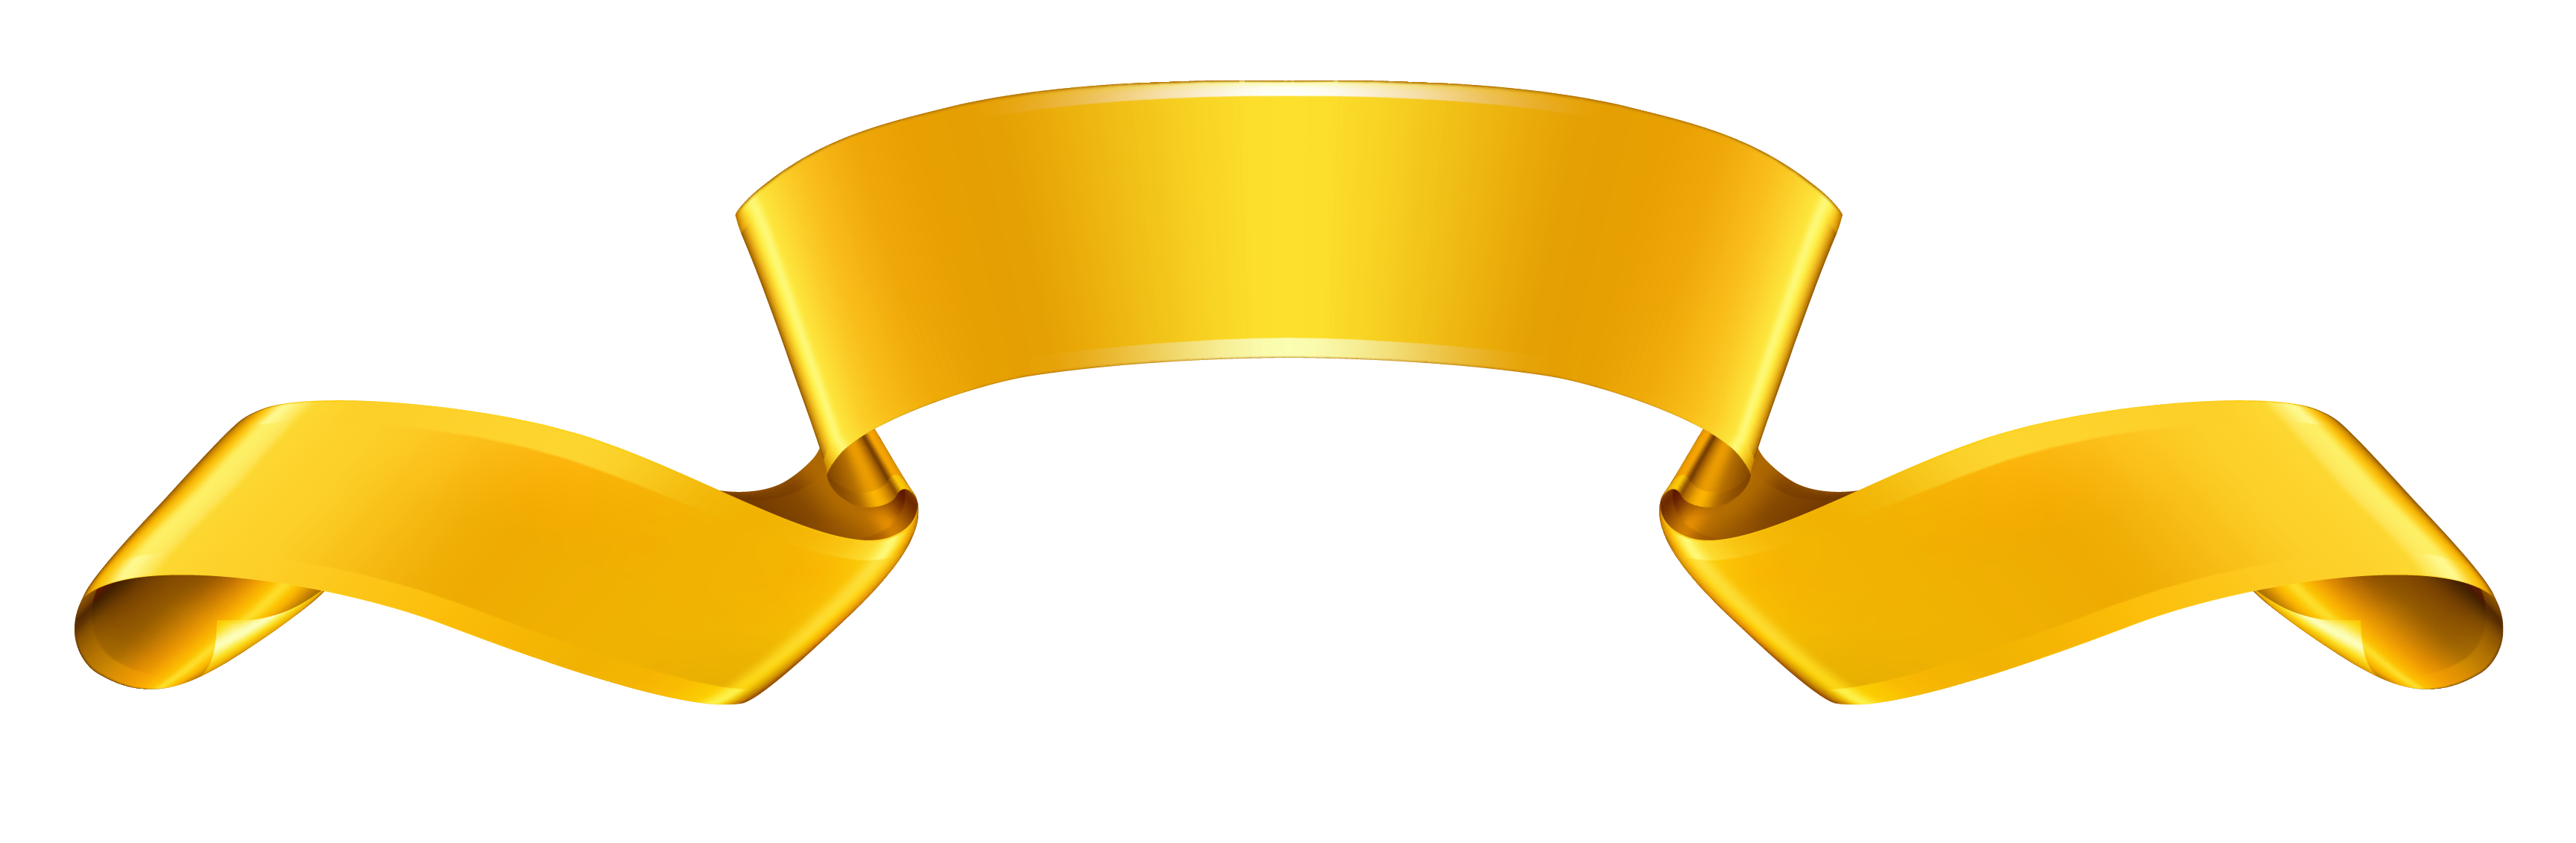 Gold Ribbon PNG Transparent Clip Art Image​